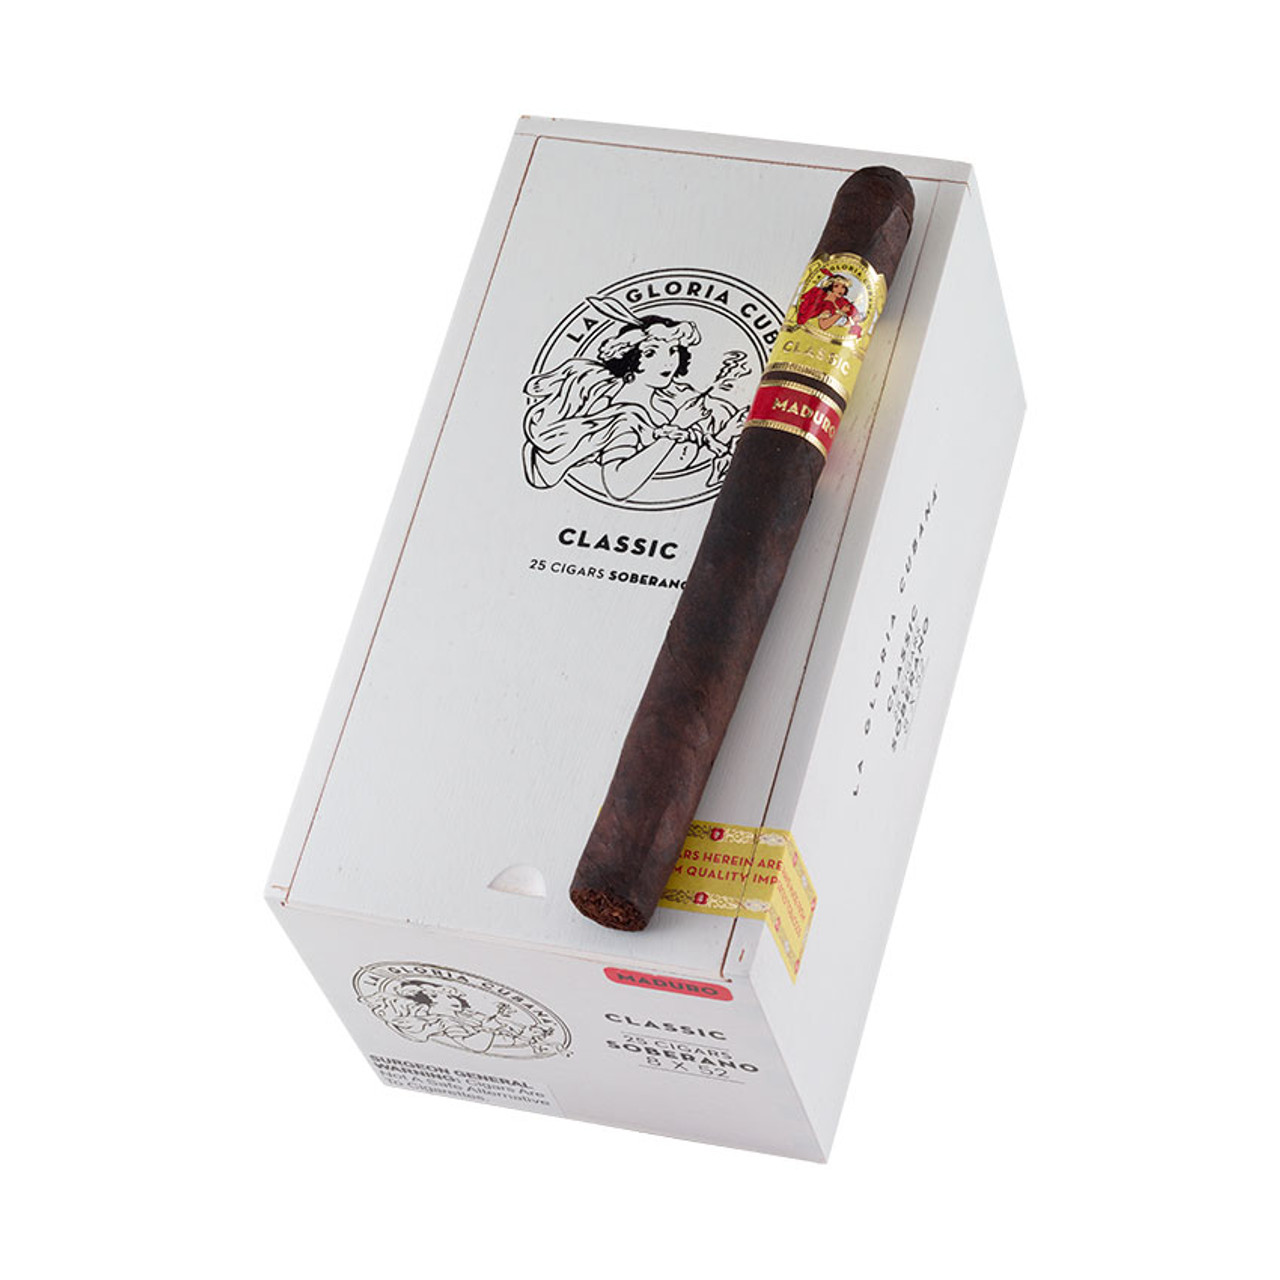 La Gloria Cubana Soberano Maduro Cigars - 8 x 52 (Box of 25) *Box